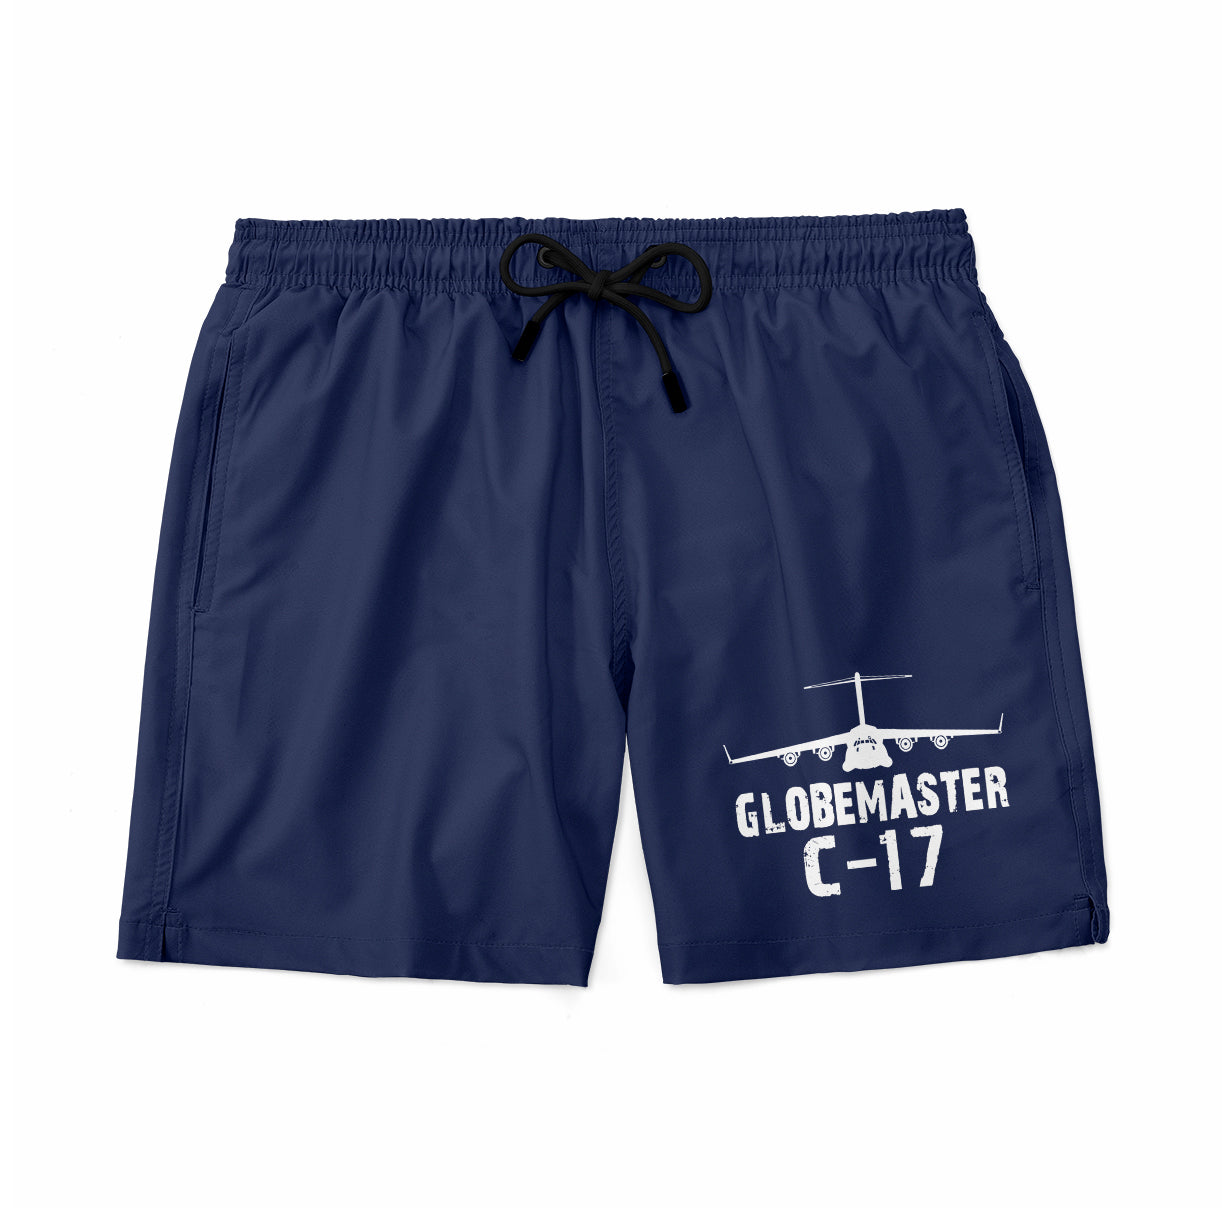 GlobeMaster C-17 & Plane Designed Swim Trunks & Shorts